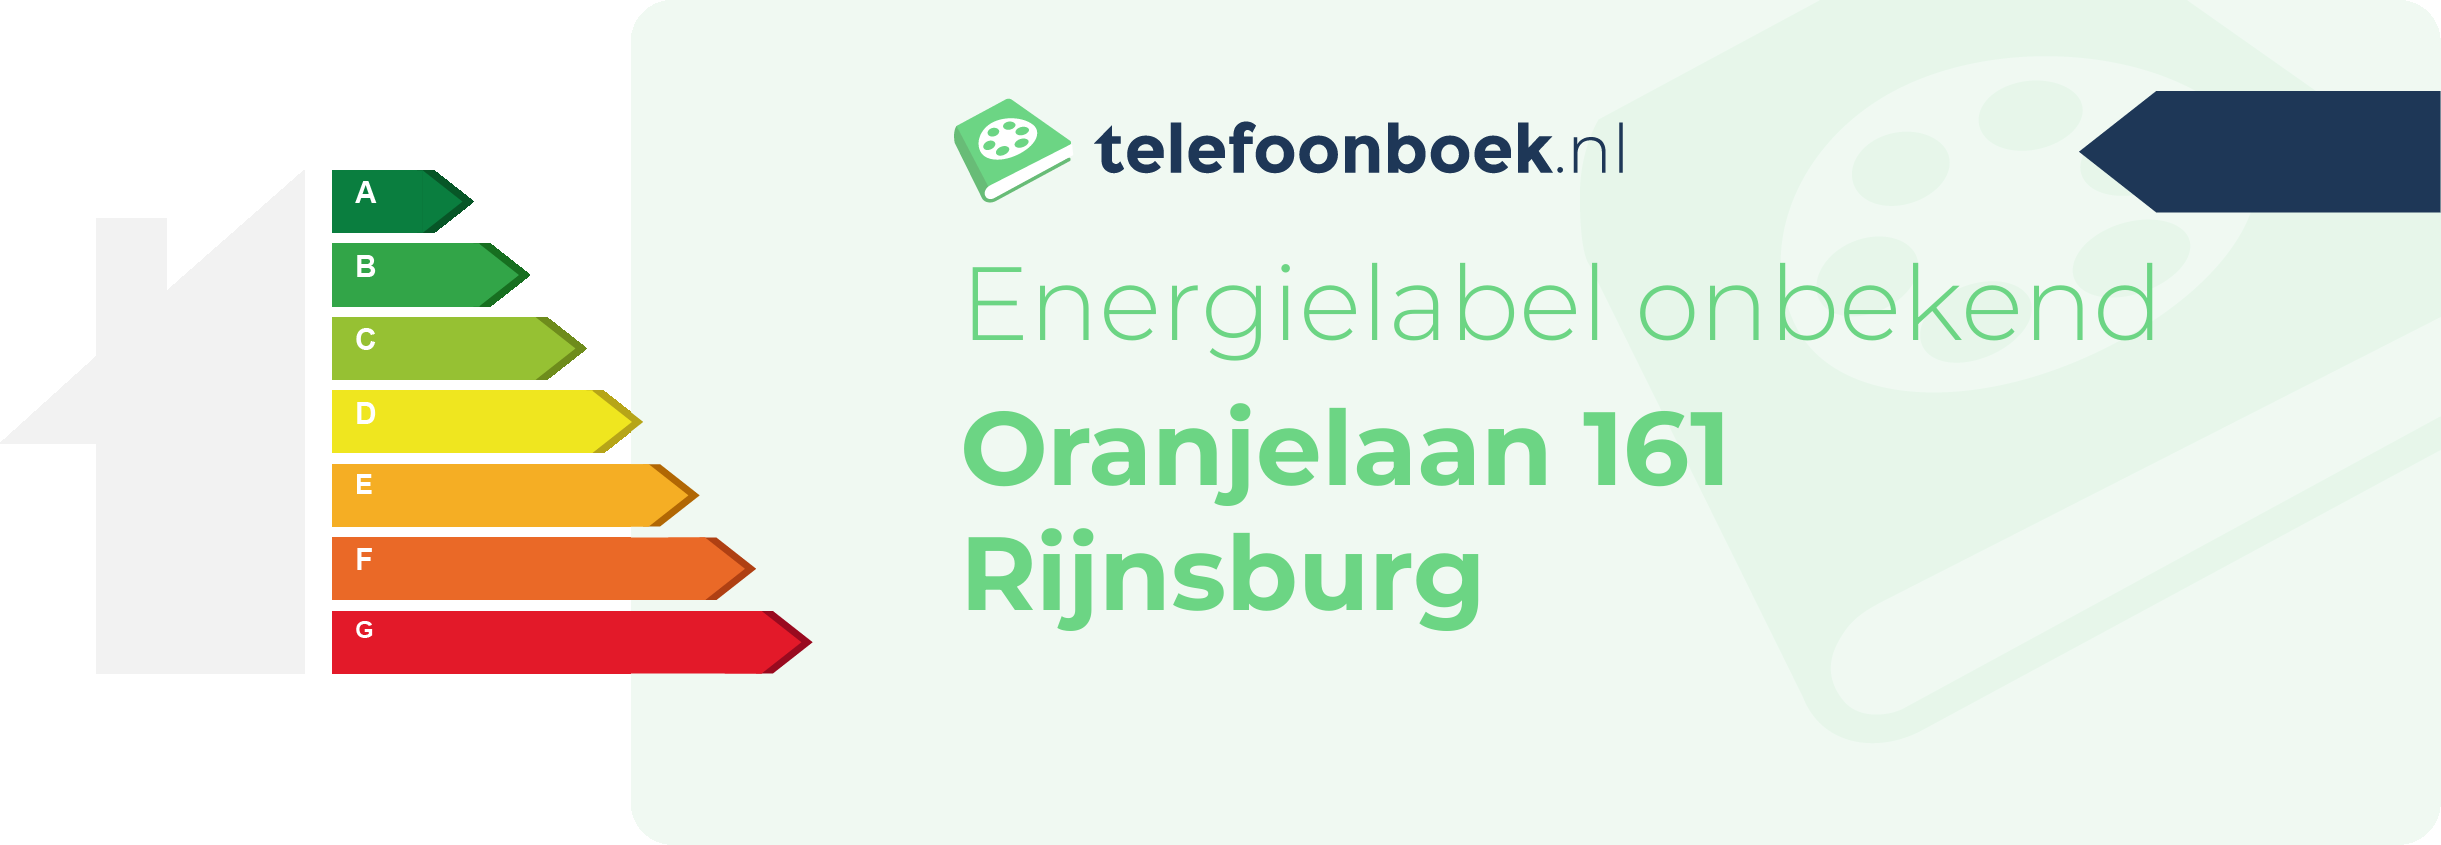 Energielabel Oranjelaan 161 Rijnsburg